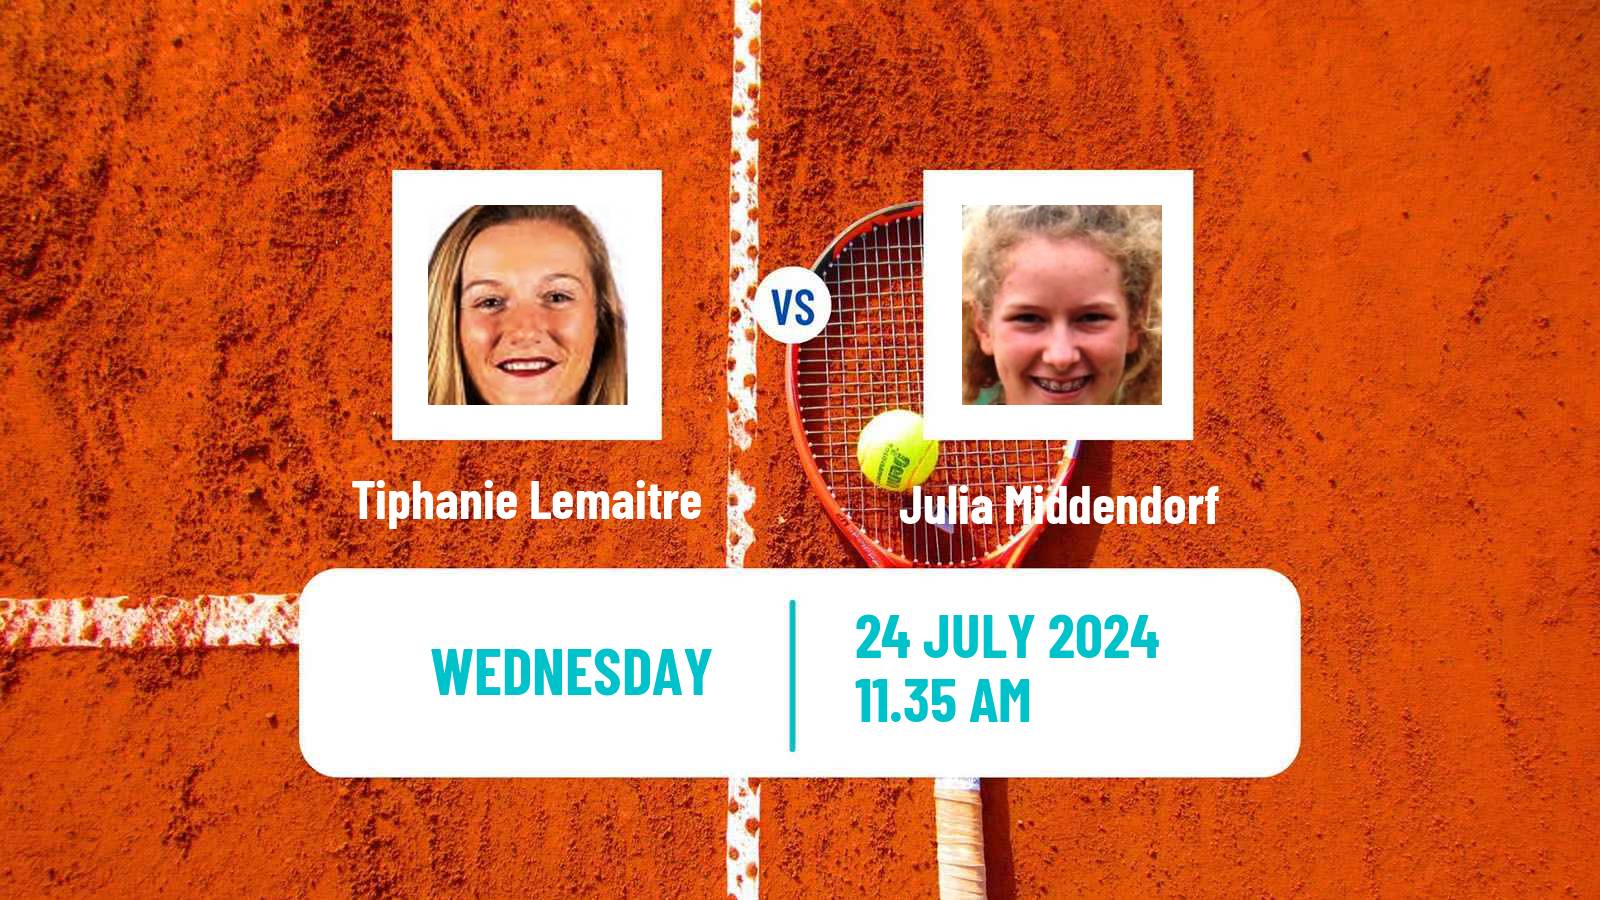 Tennis ITF W35 Horb Women Tiphanie Lemaitre - Julia Middendorf